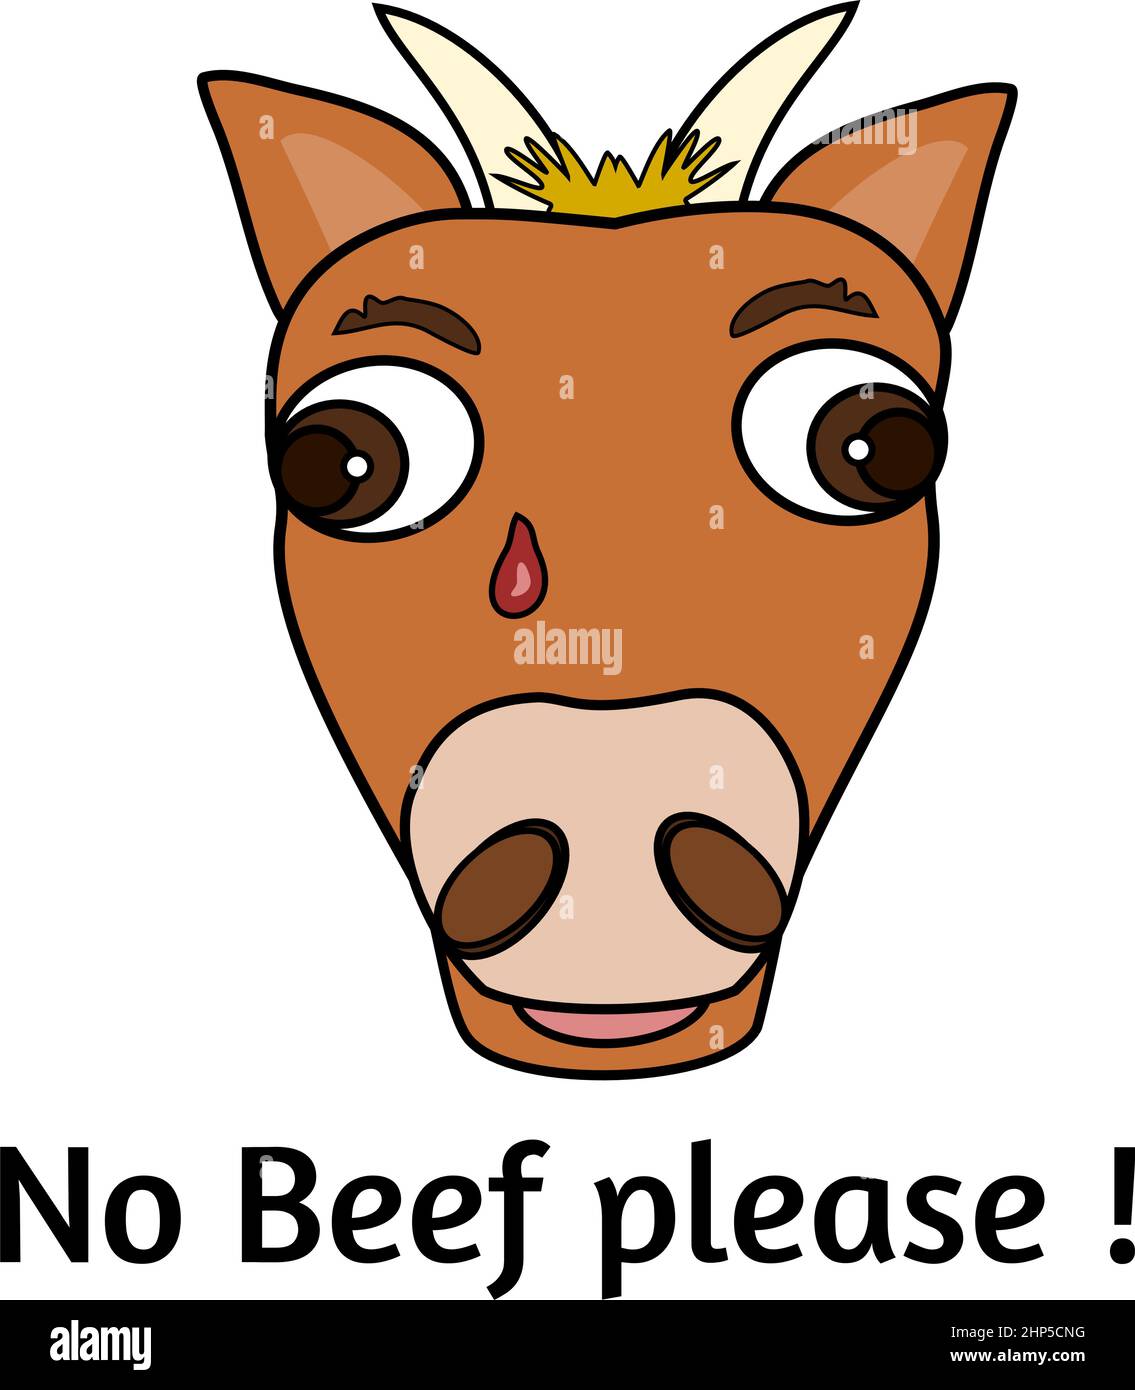 No beef please ! Stock Vector